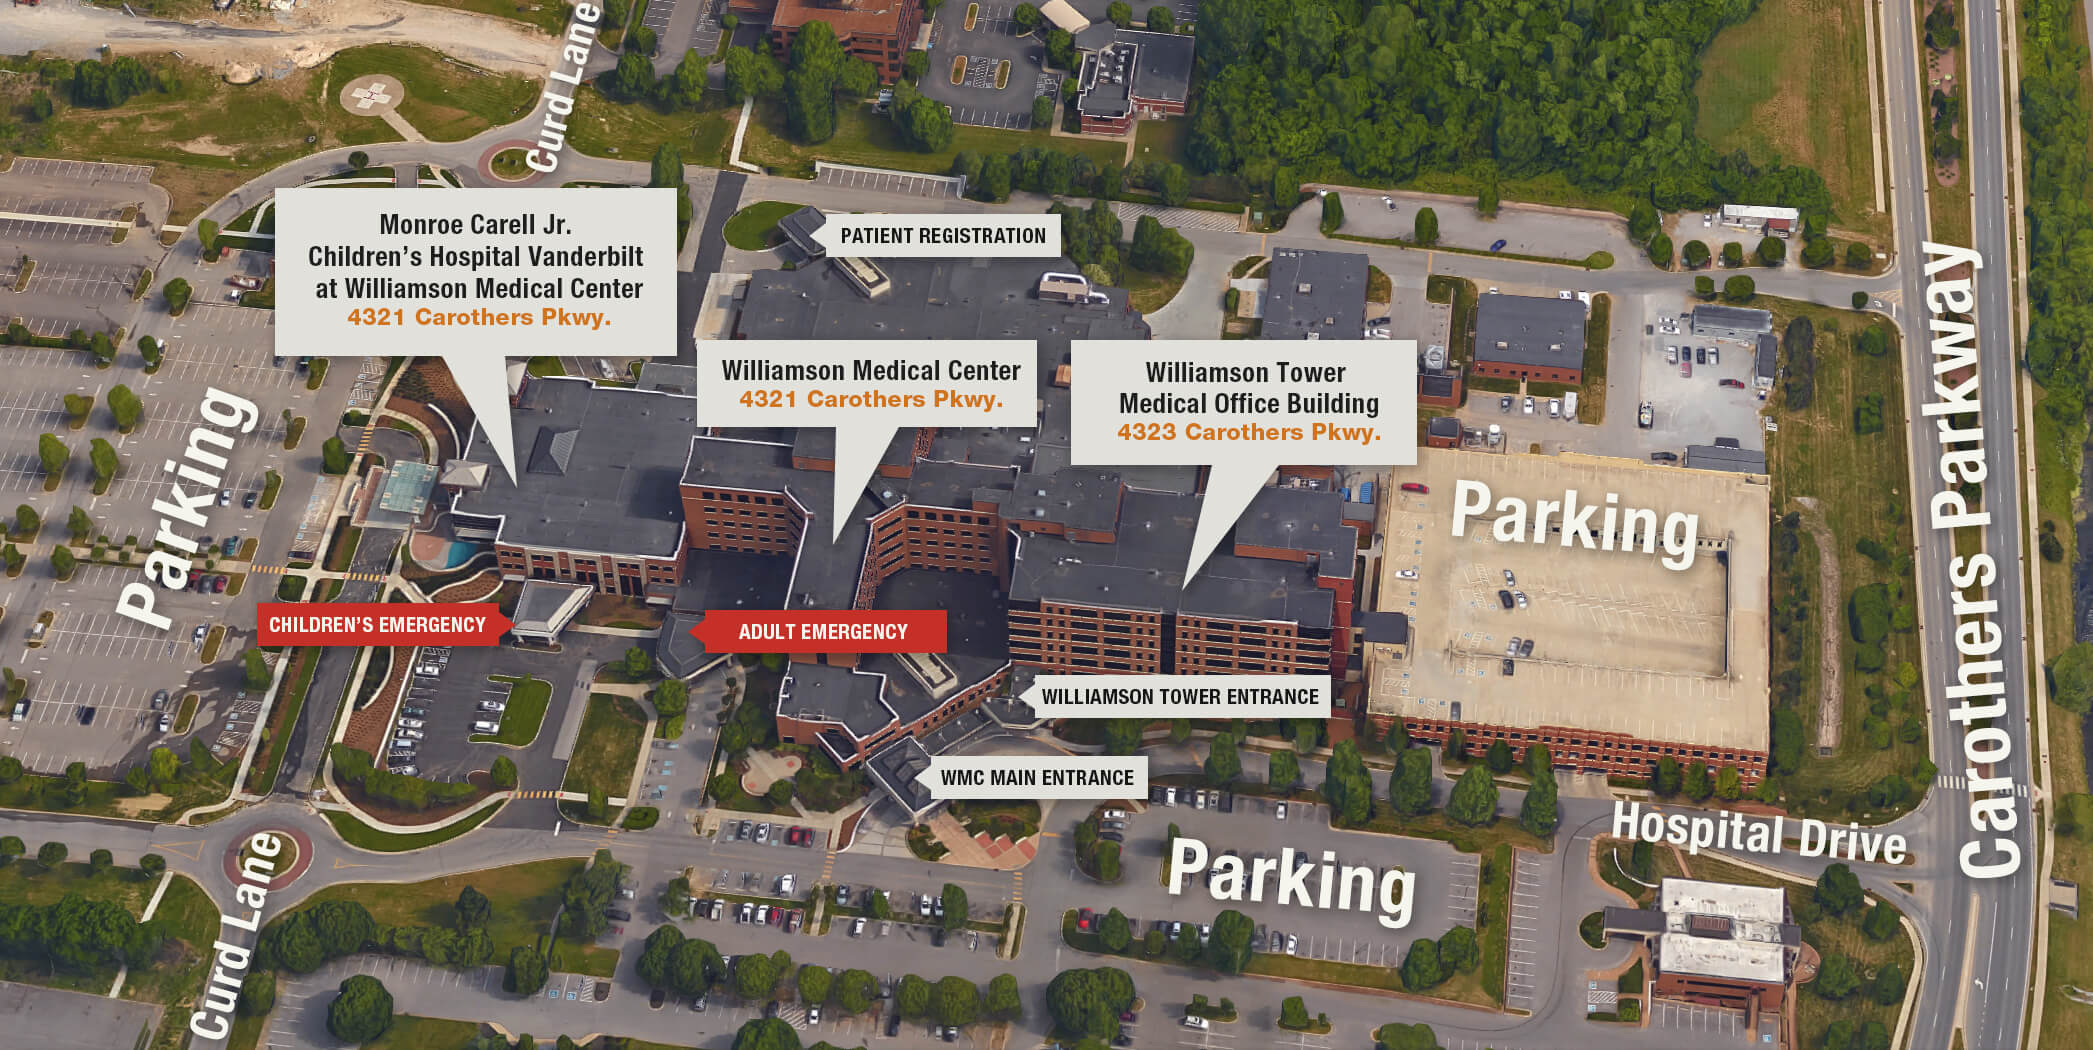 Buildings at Williamson Medical Center